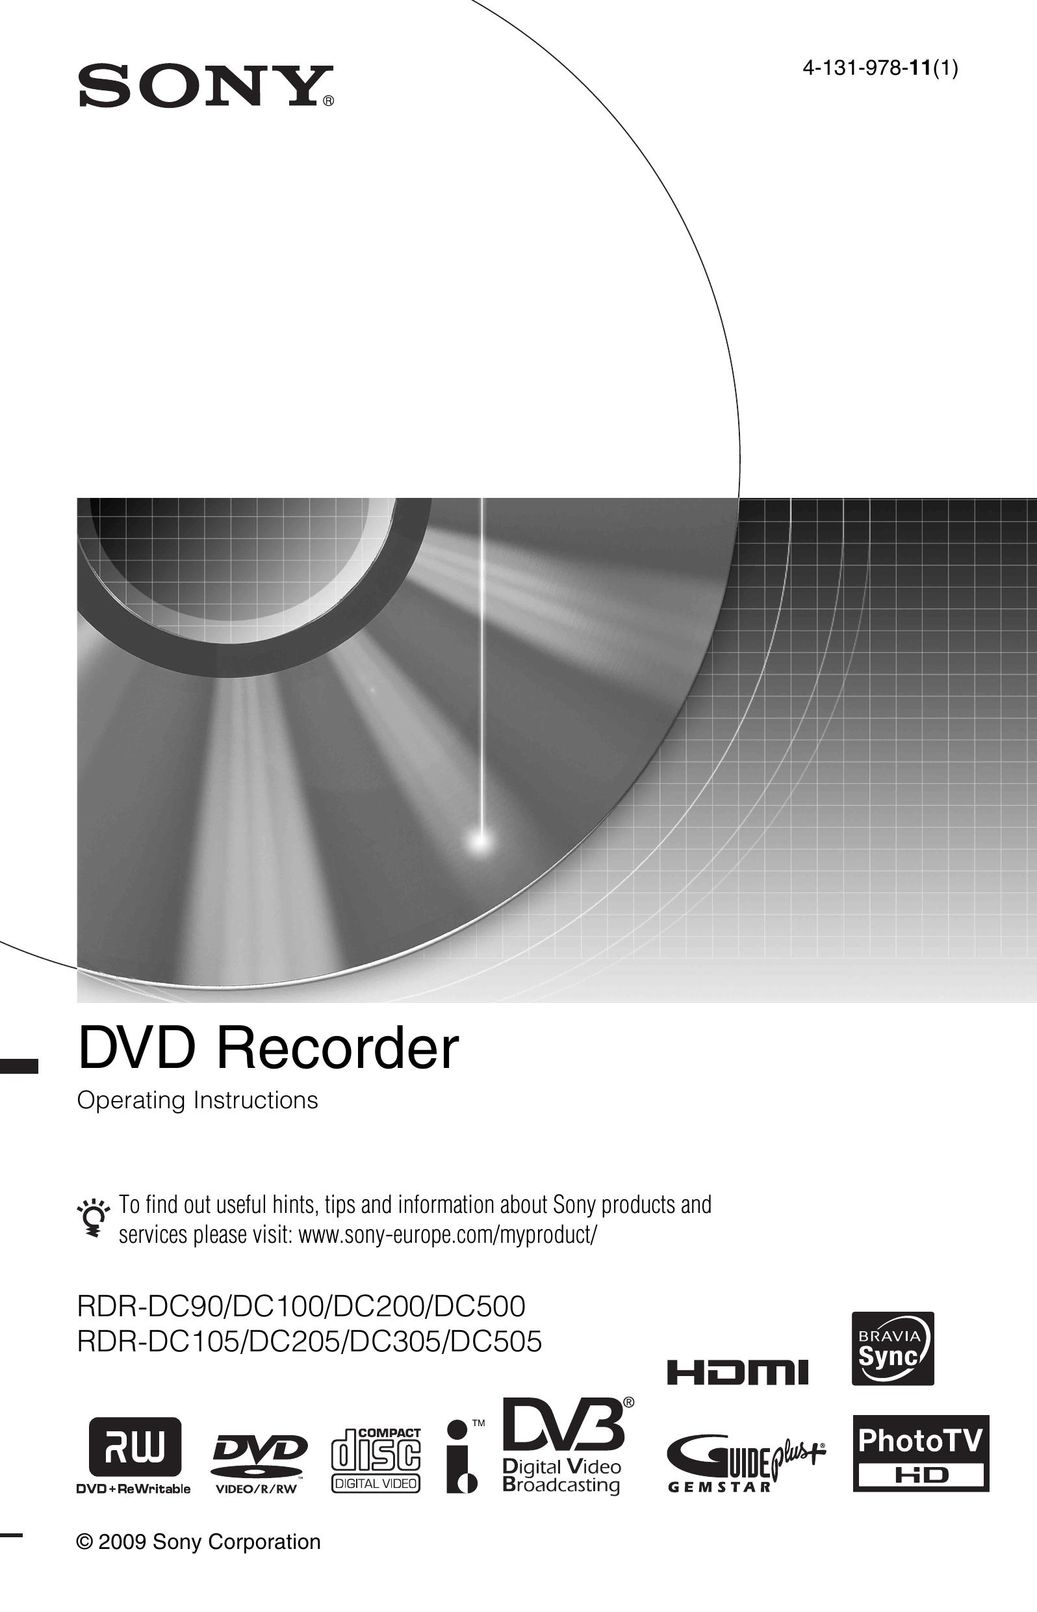 Sony RDR-DC205 DVD Recorder User Manual